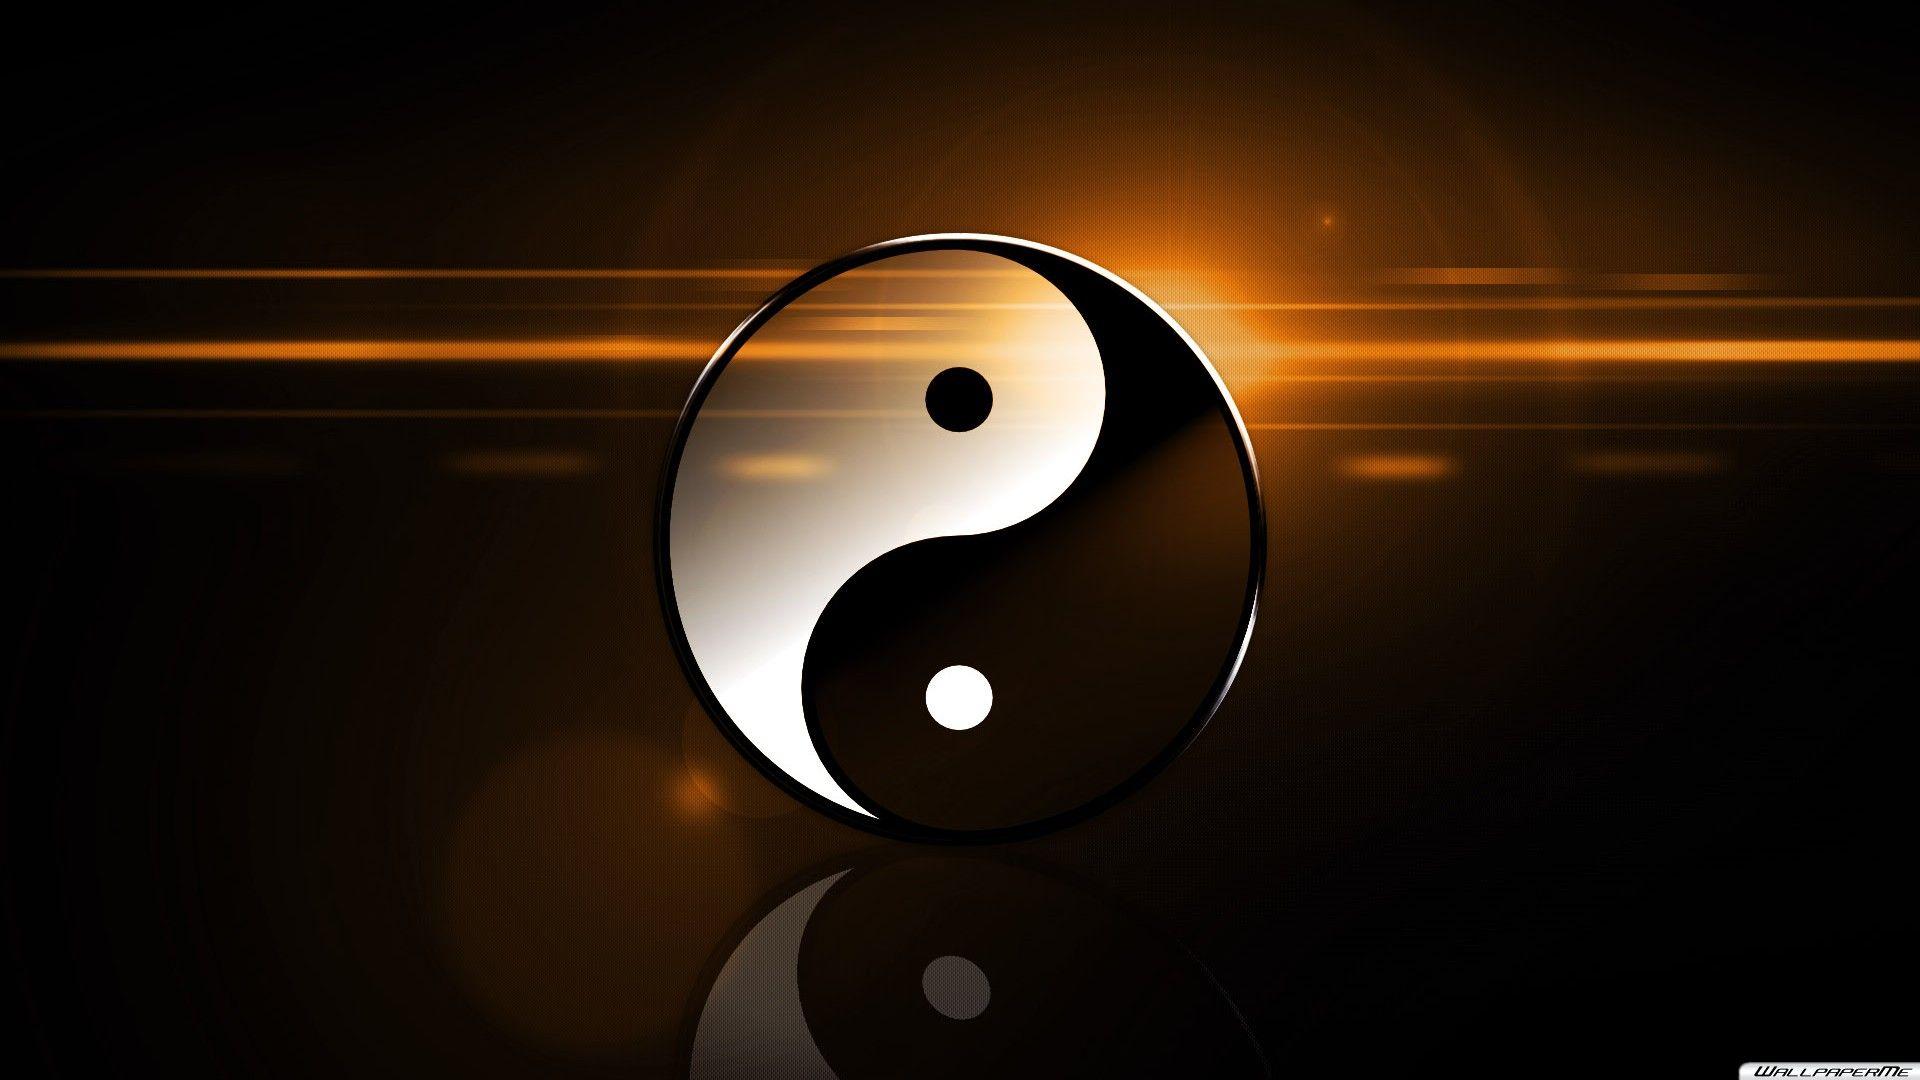 Yin and Yang Wallpapers - Top Free Yin and Yang Backgrounds